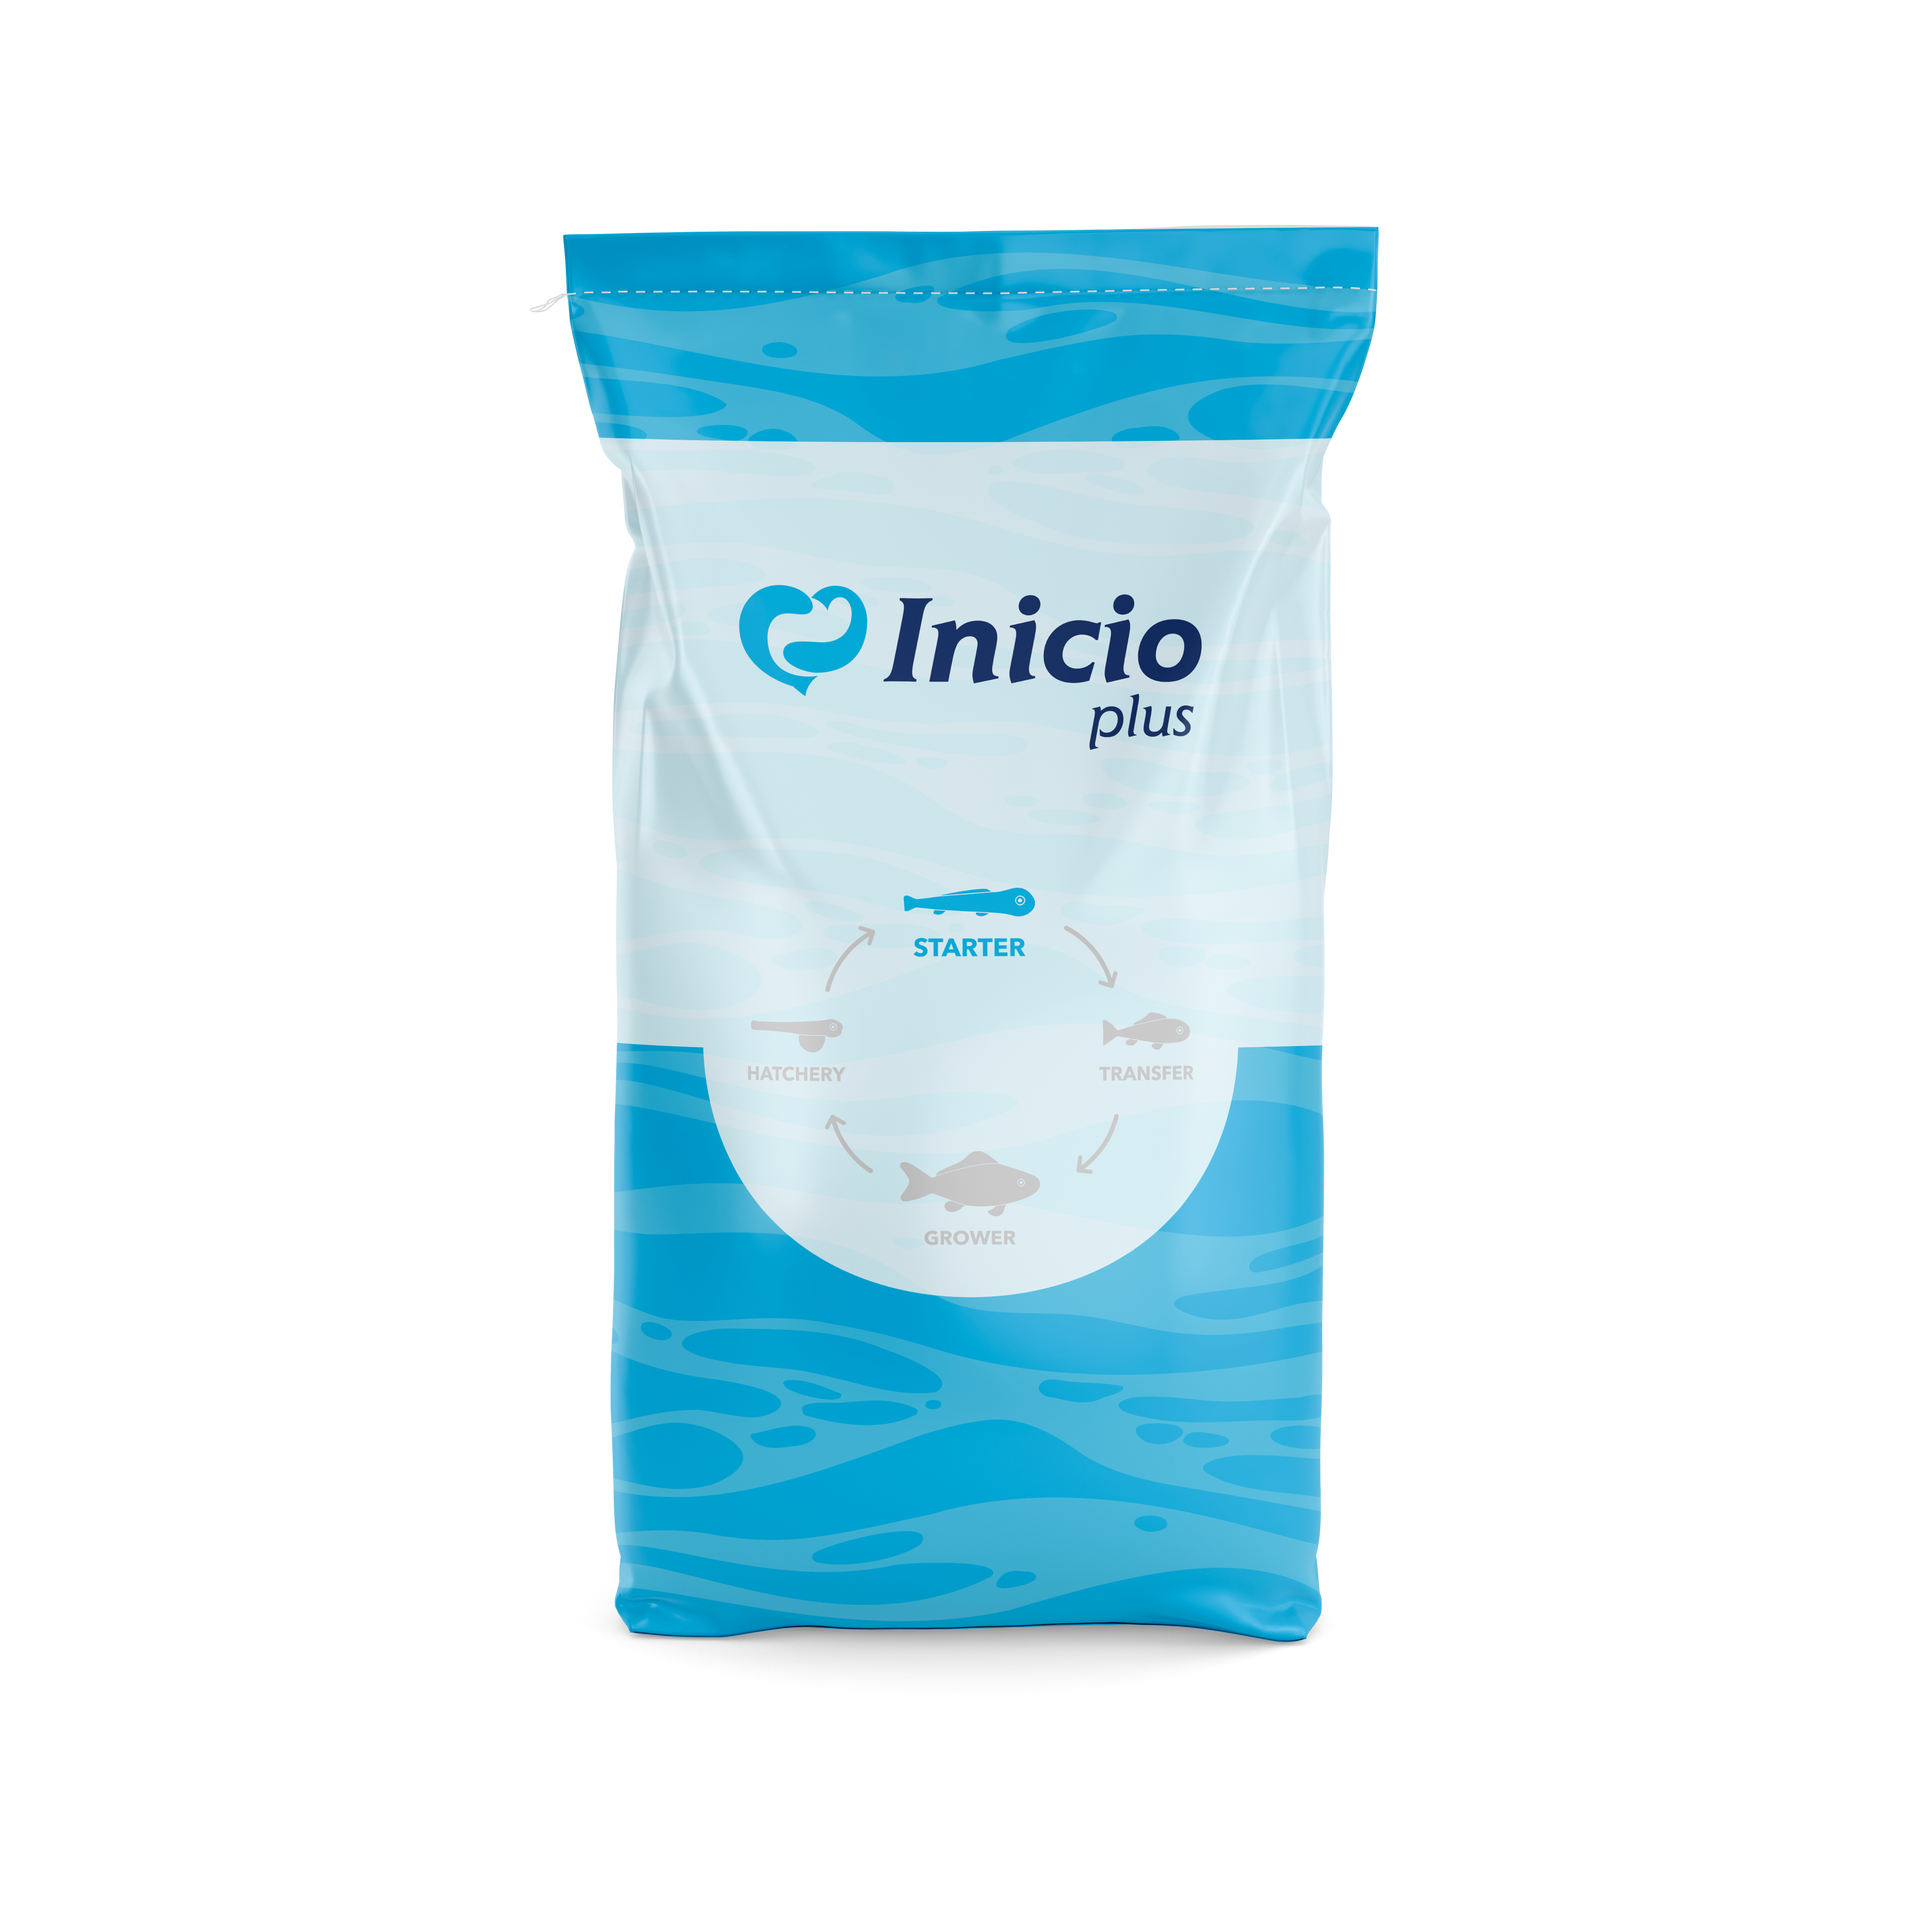 Inicio Plus feed for salmon